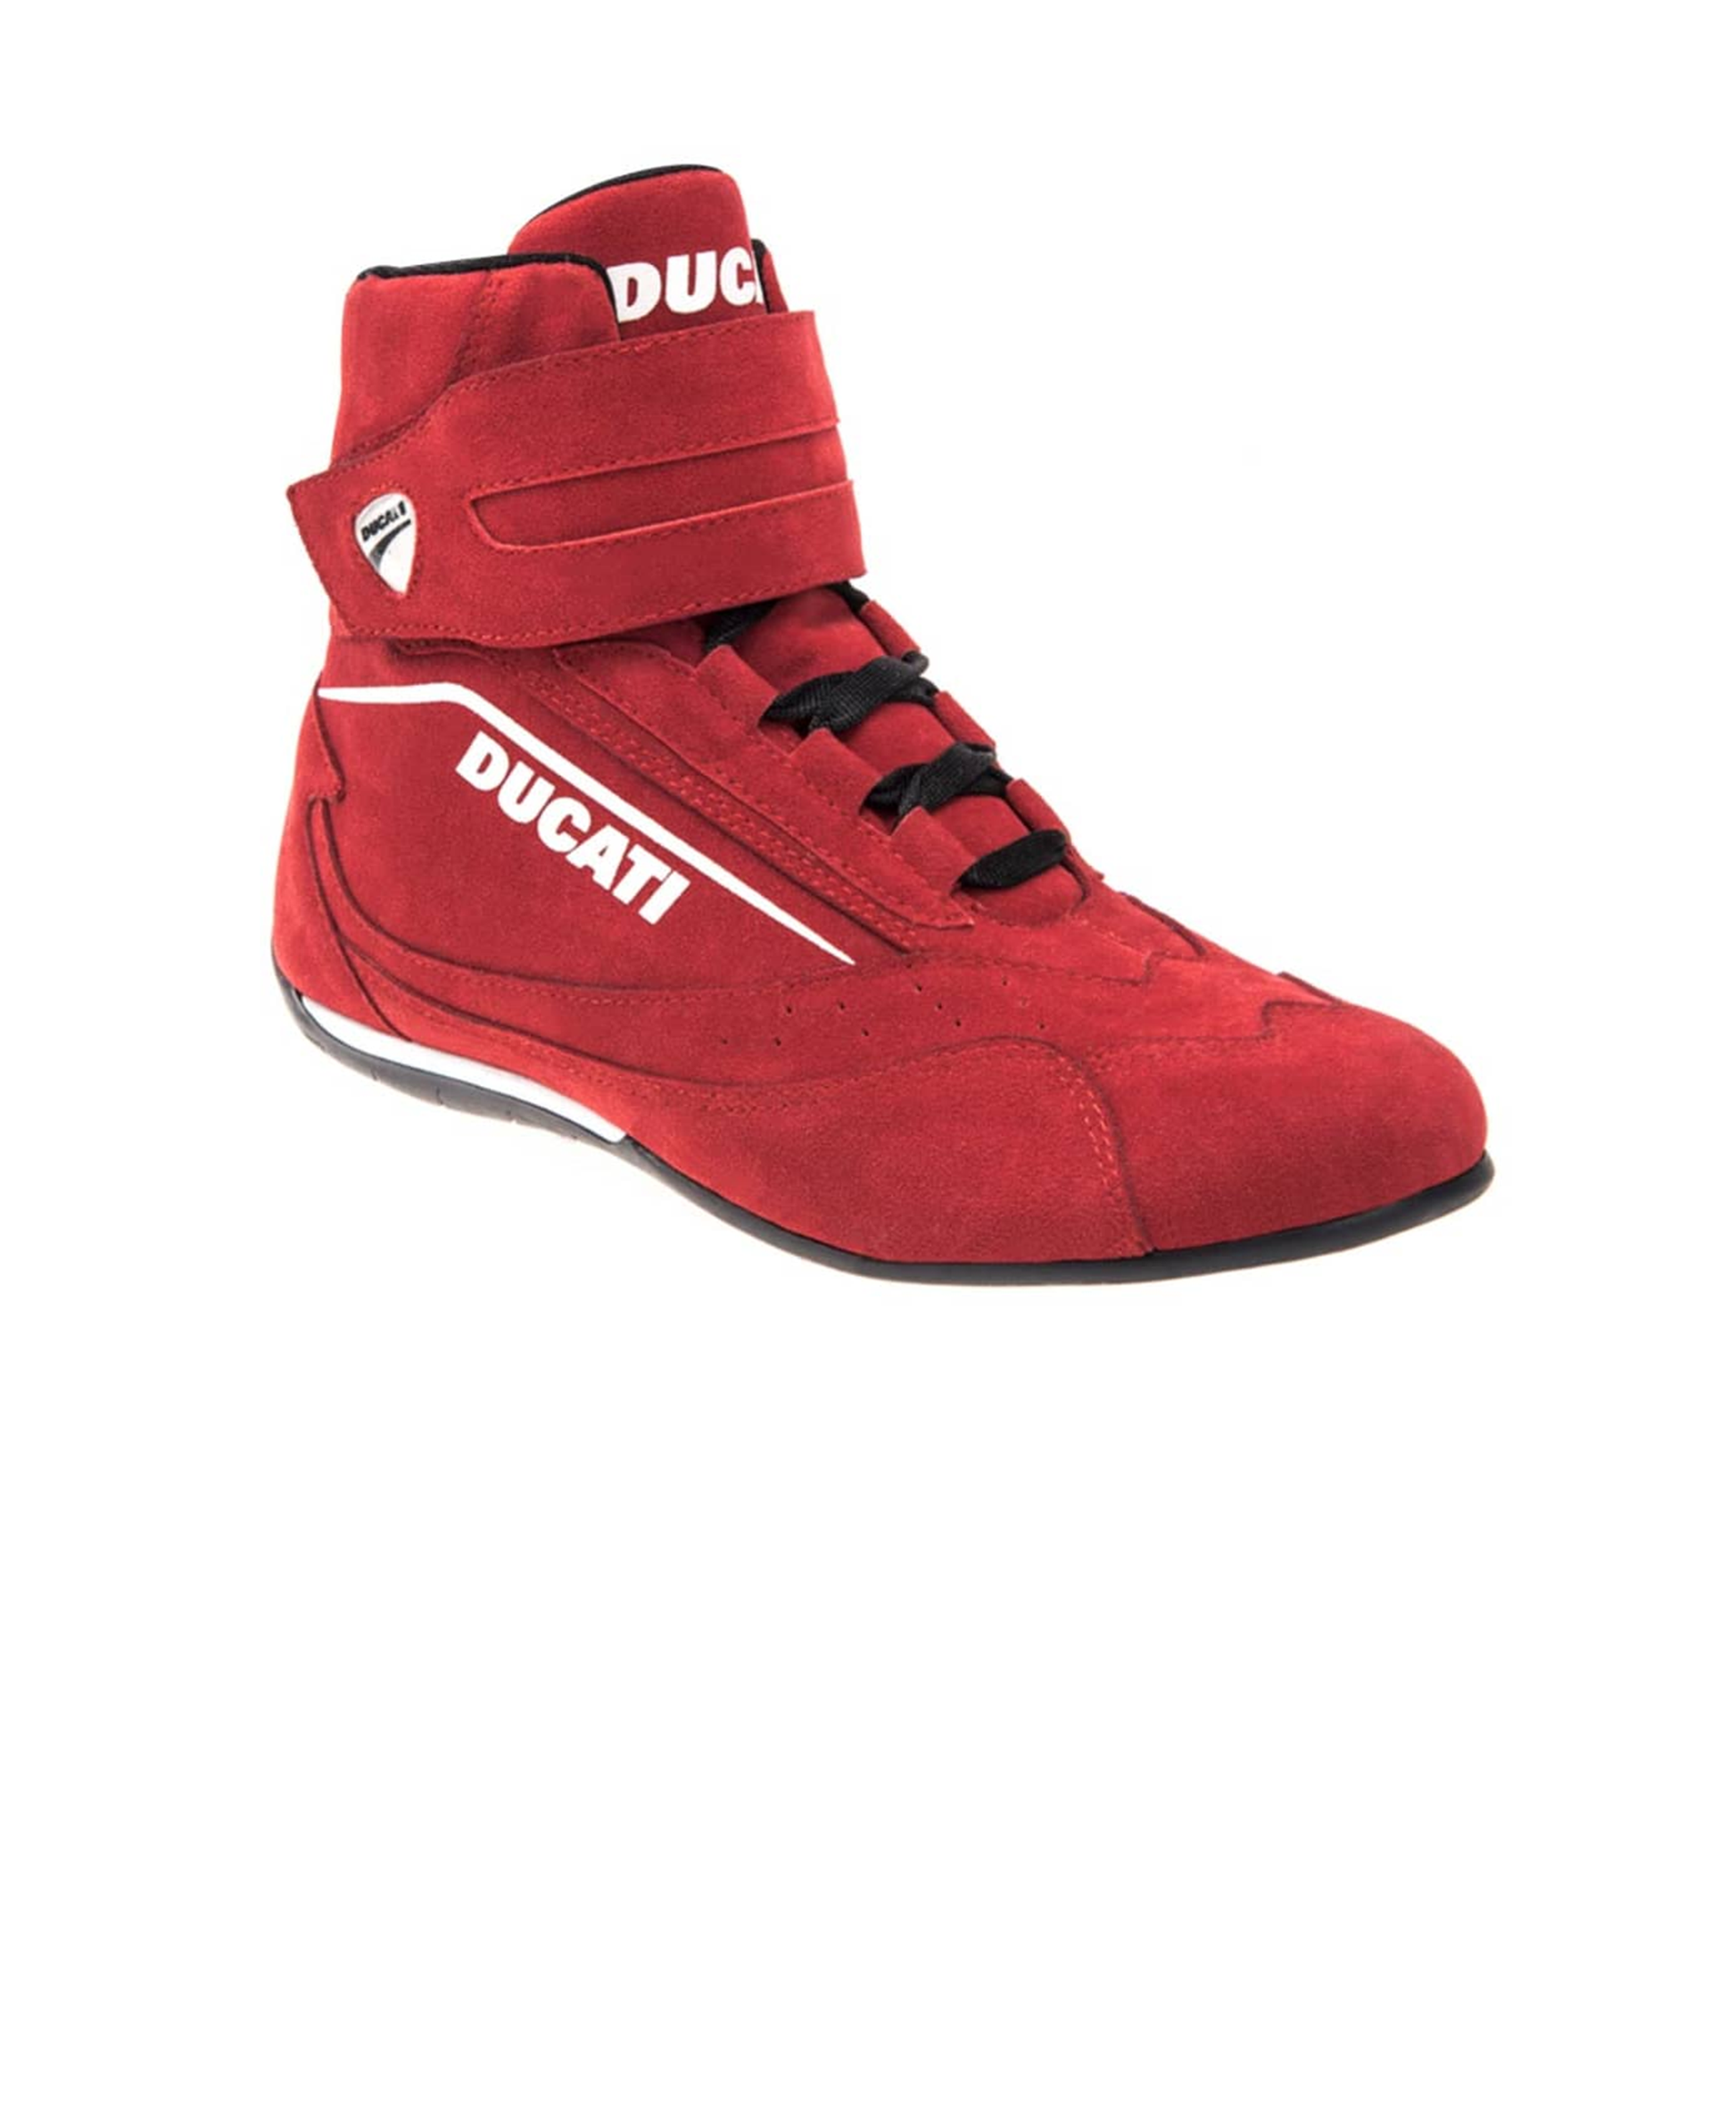 Tenis Ducati hombre color rojo – Bear